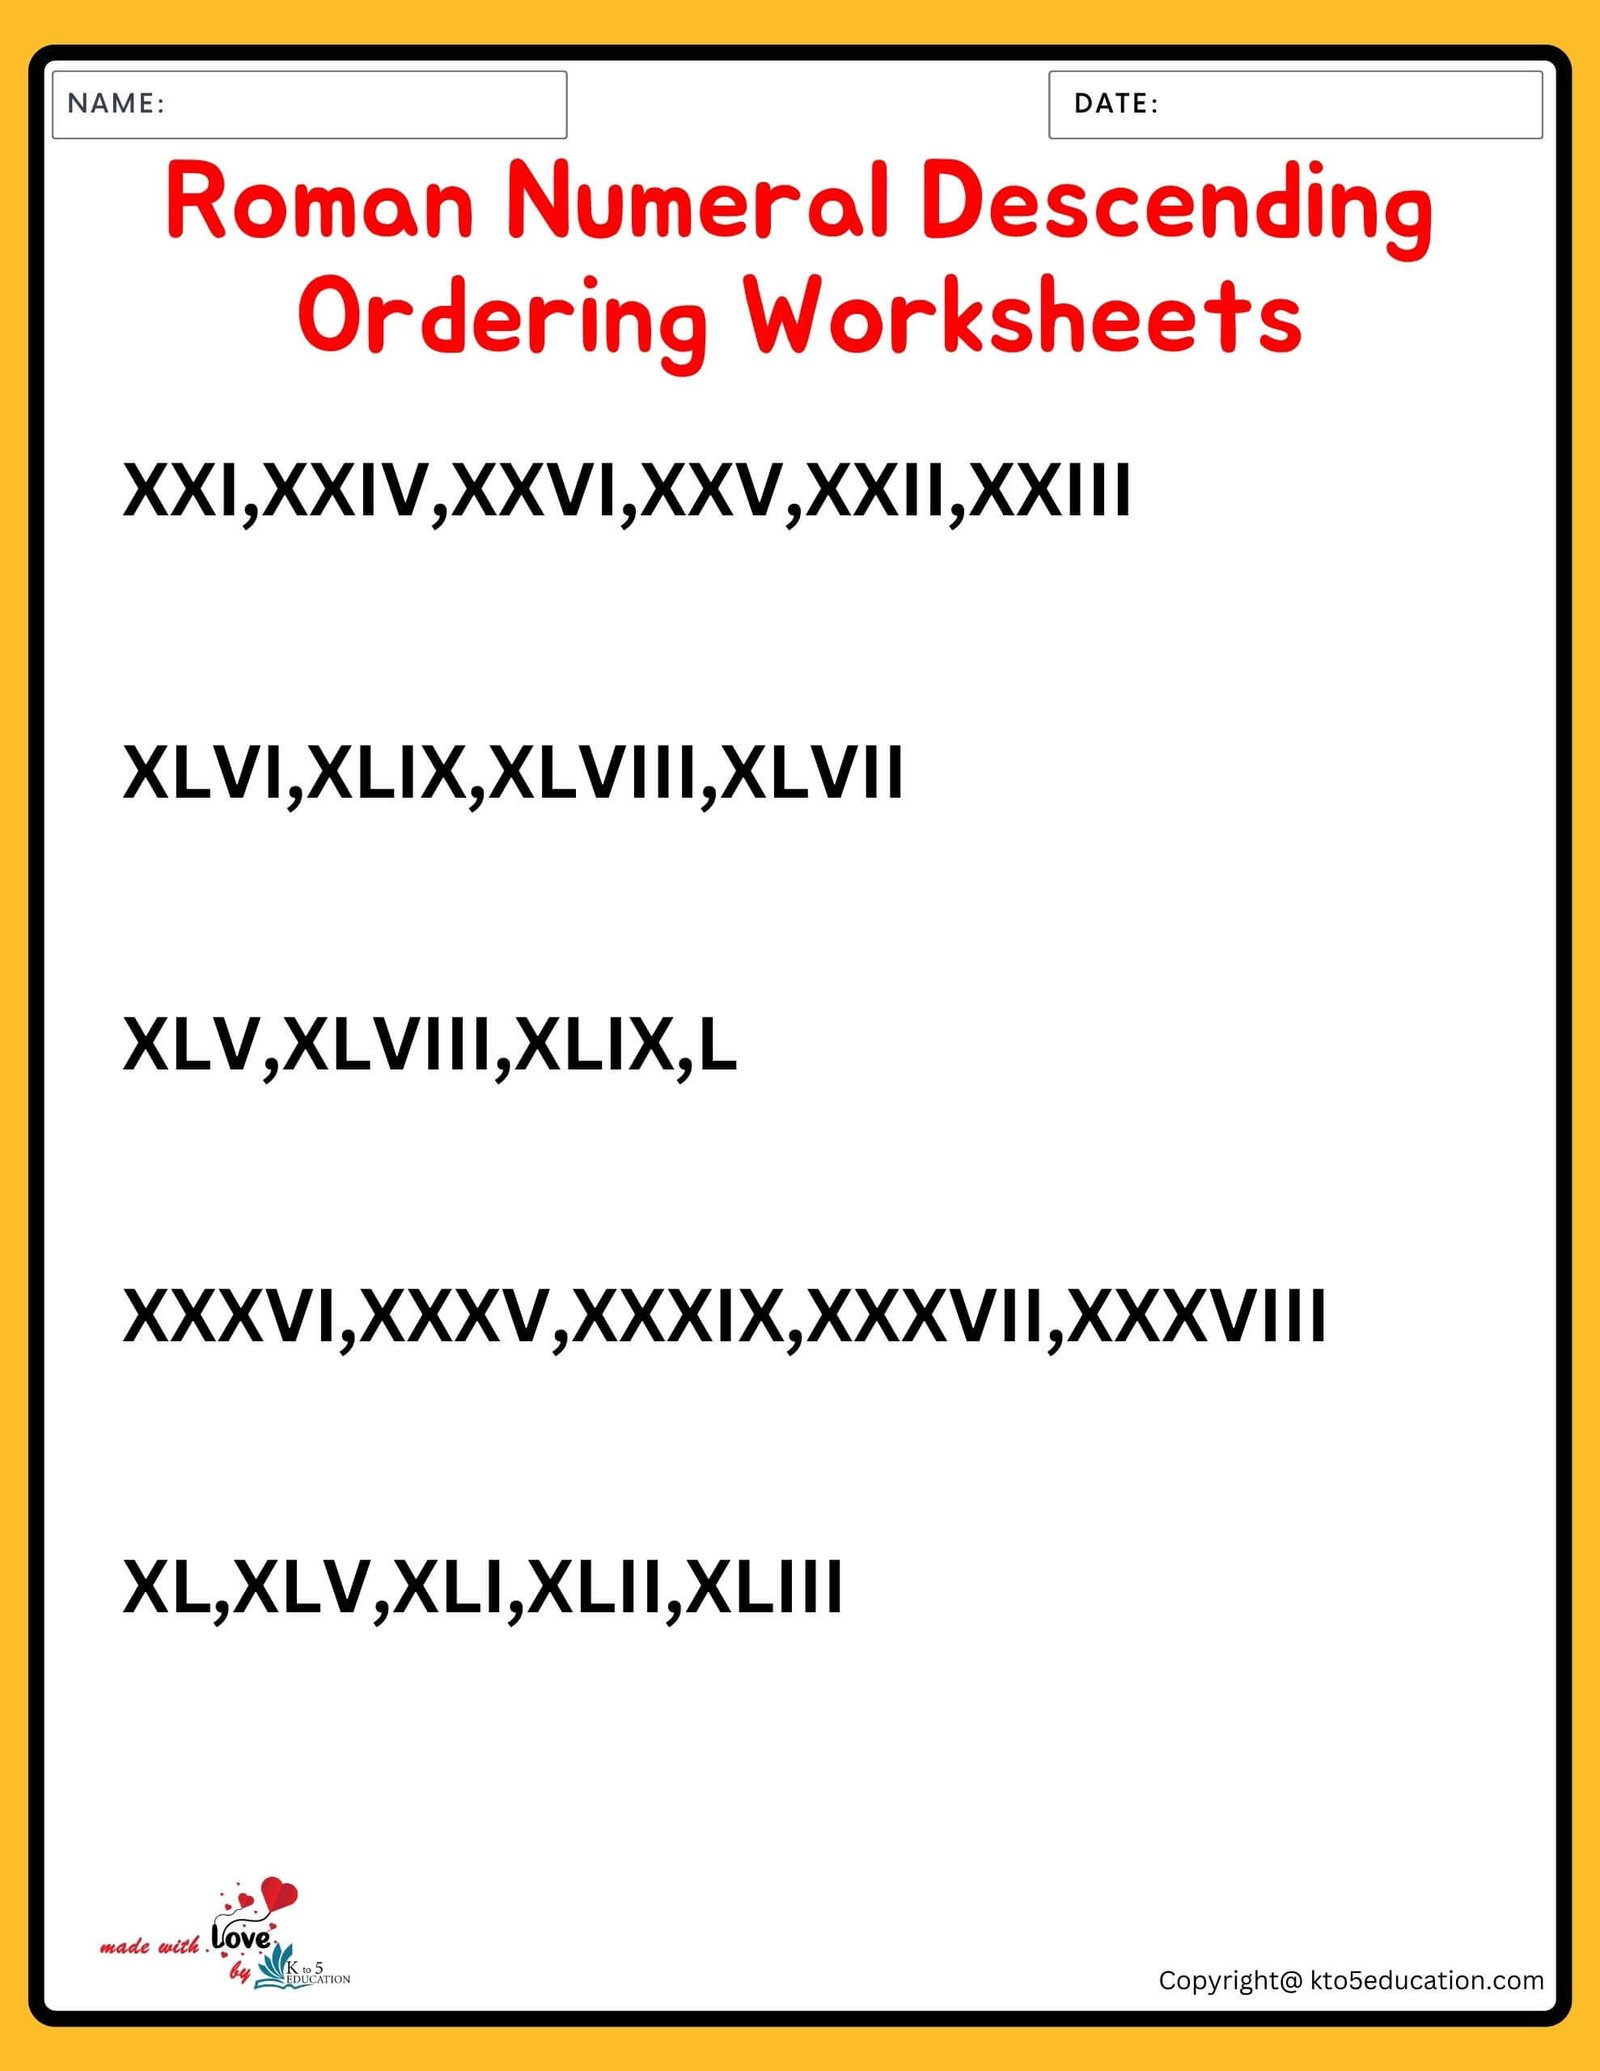 Roman Numeral Descending Ordering Worksheets